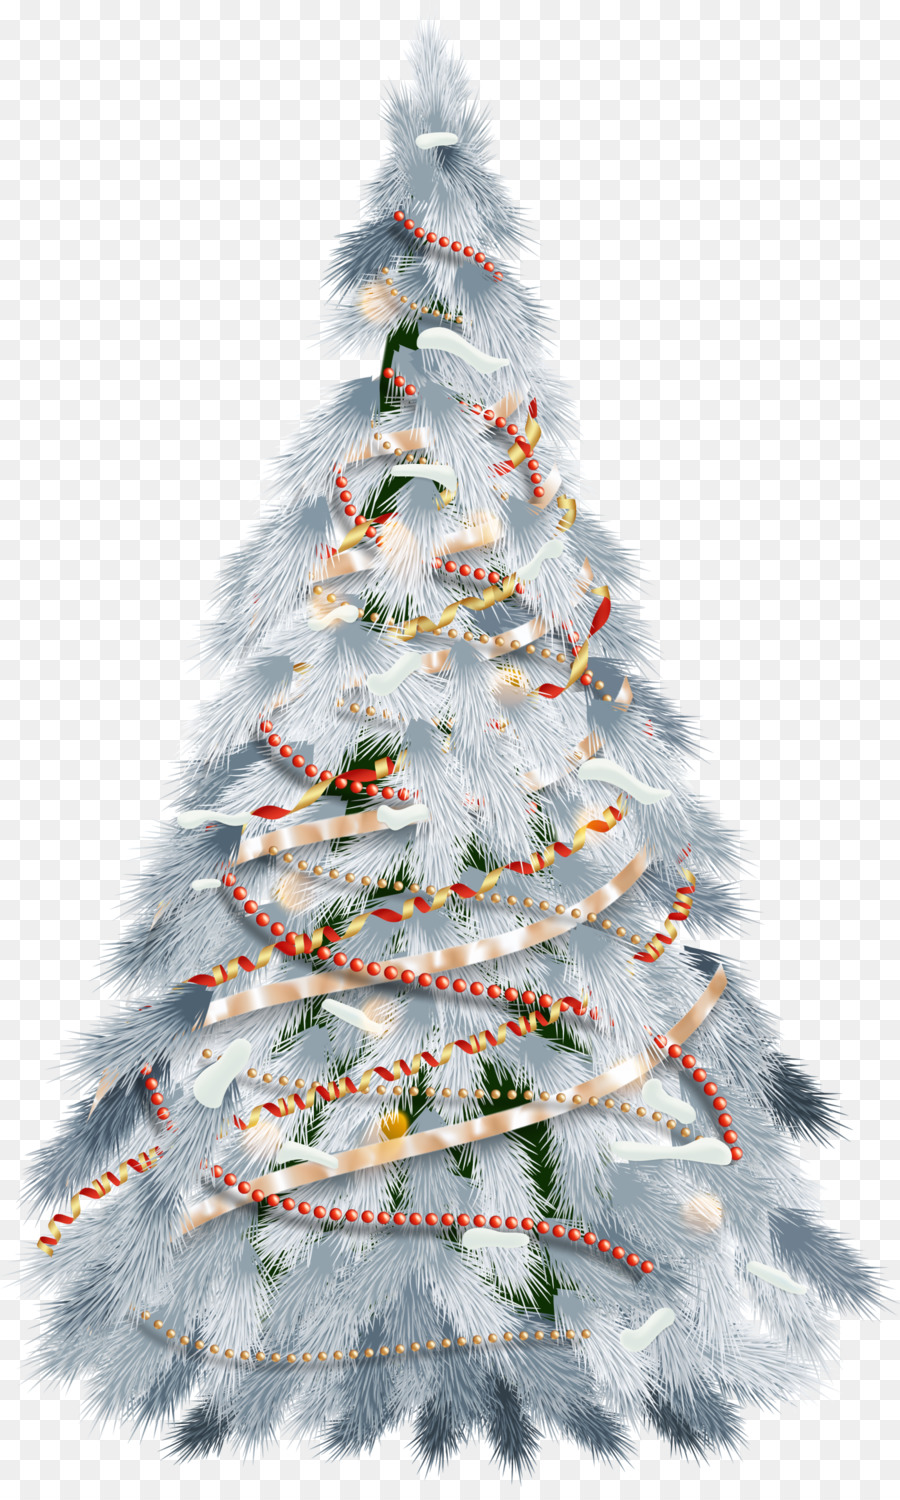 Weihnachtsbaum Christmas ornament White Christmas - Die white ribbon Christmas tree